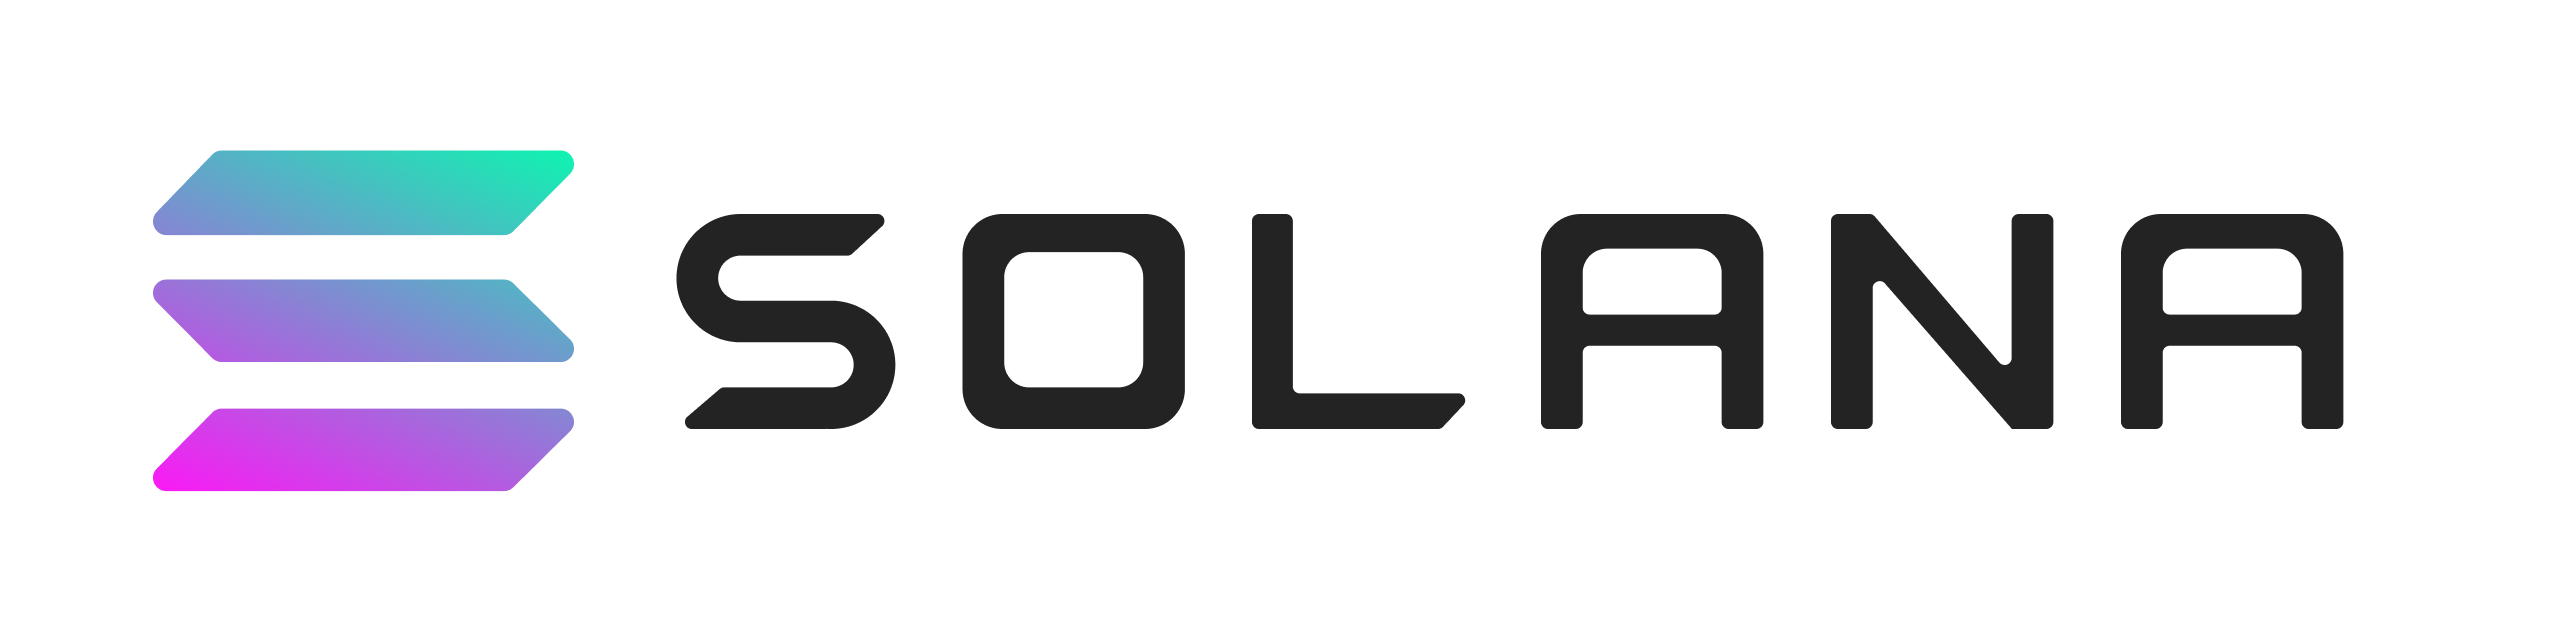 Solana (SOL) Spaces Brings Crypto to Real World Despite Virtual